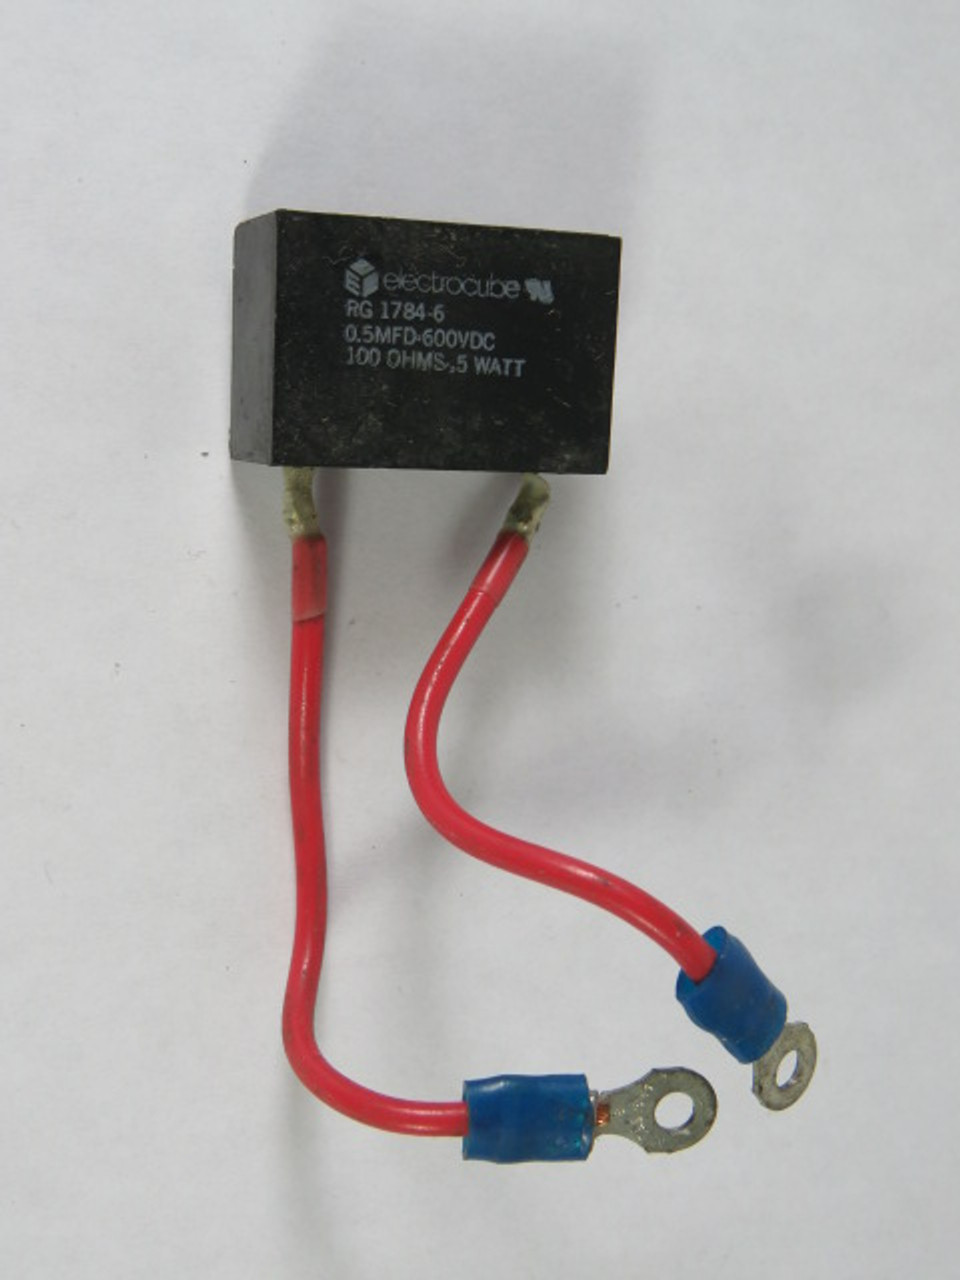 Electrocube RG-1784-6 RC Network 0.5MFD 100 Ohms 5W 600VDC USED